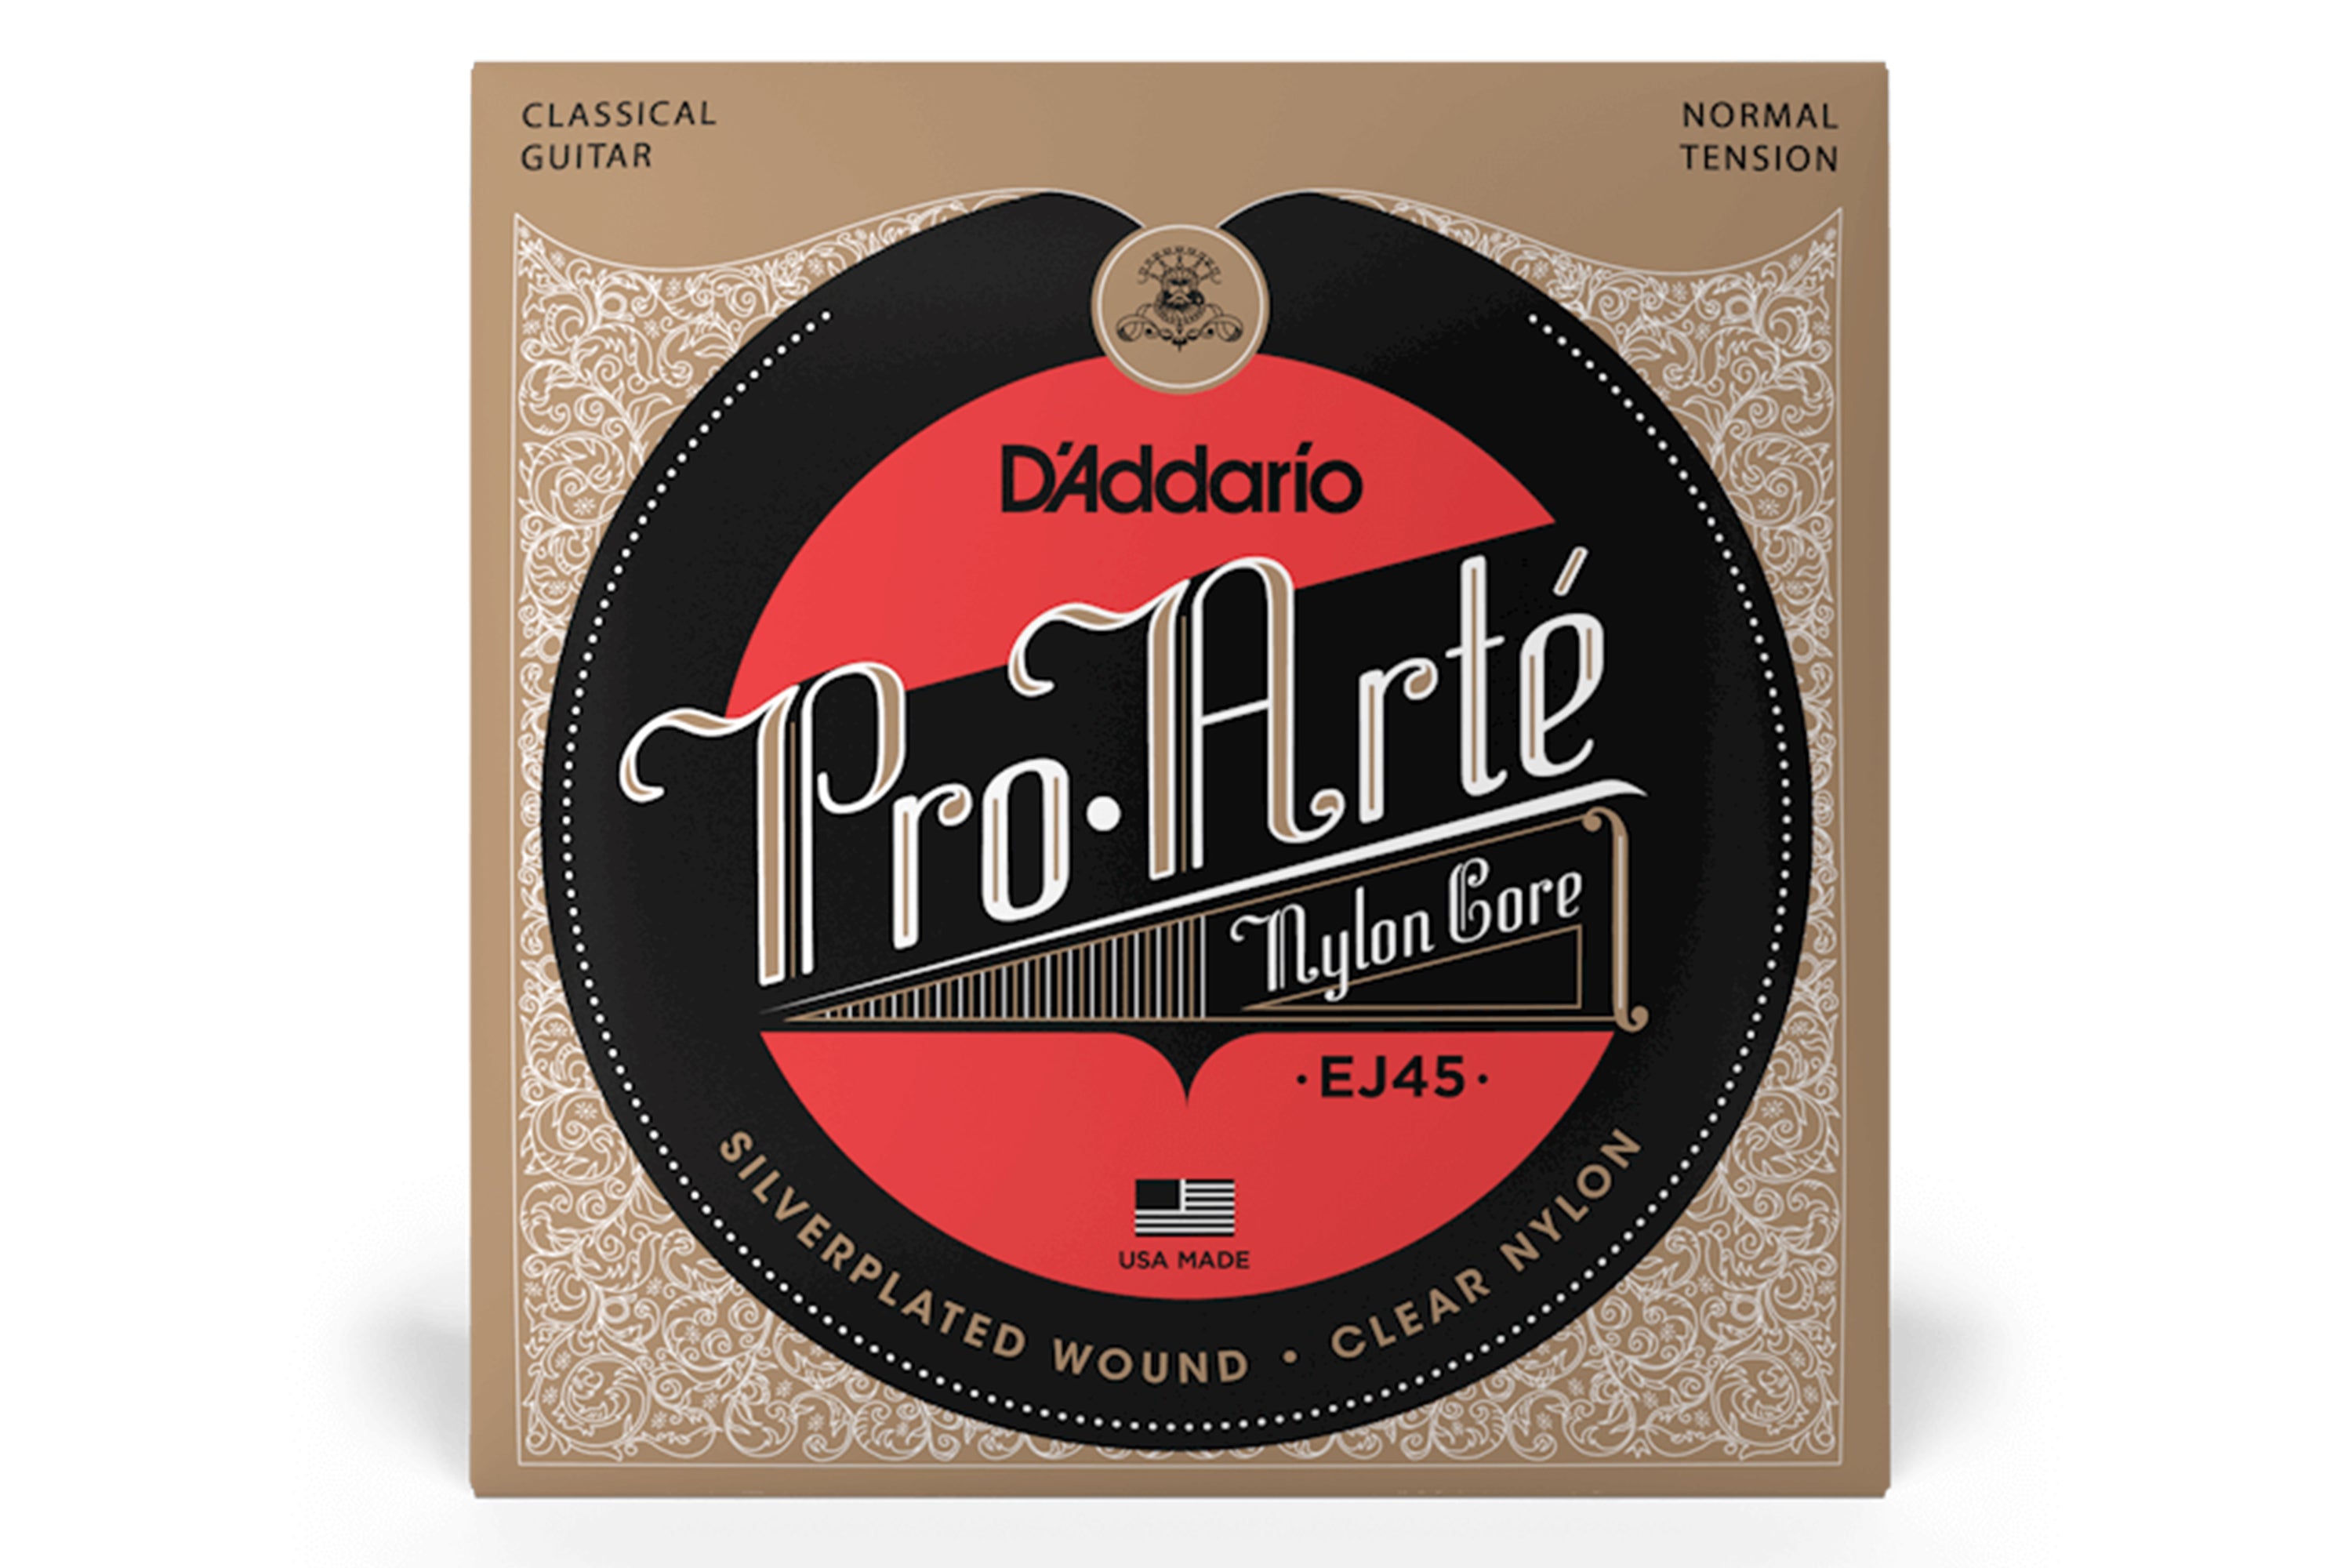 D'Addario EJ45 Pro-Arte Classical Guitar Strings - Normal Tension